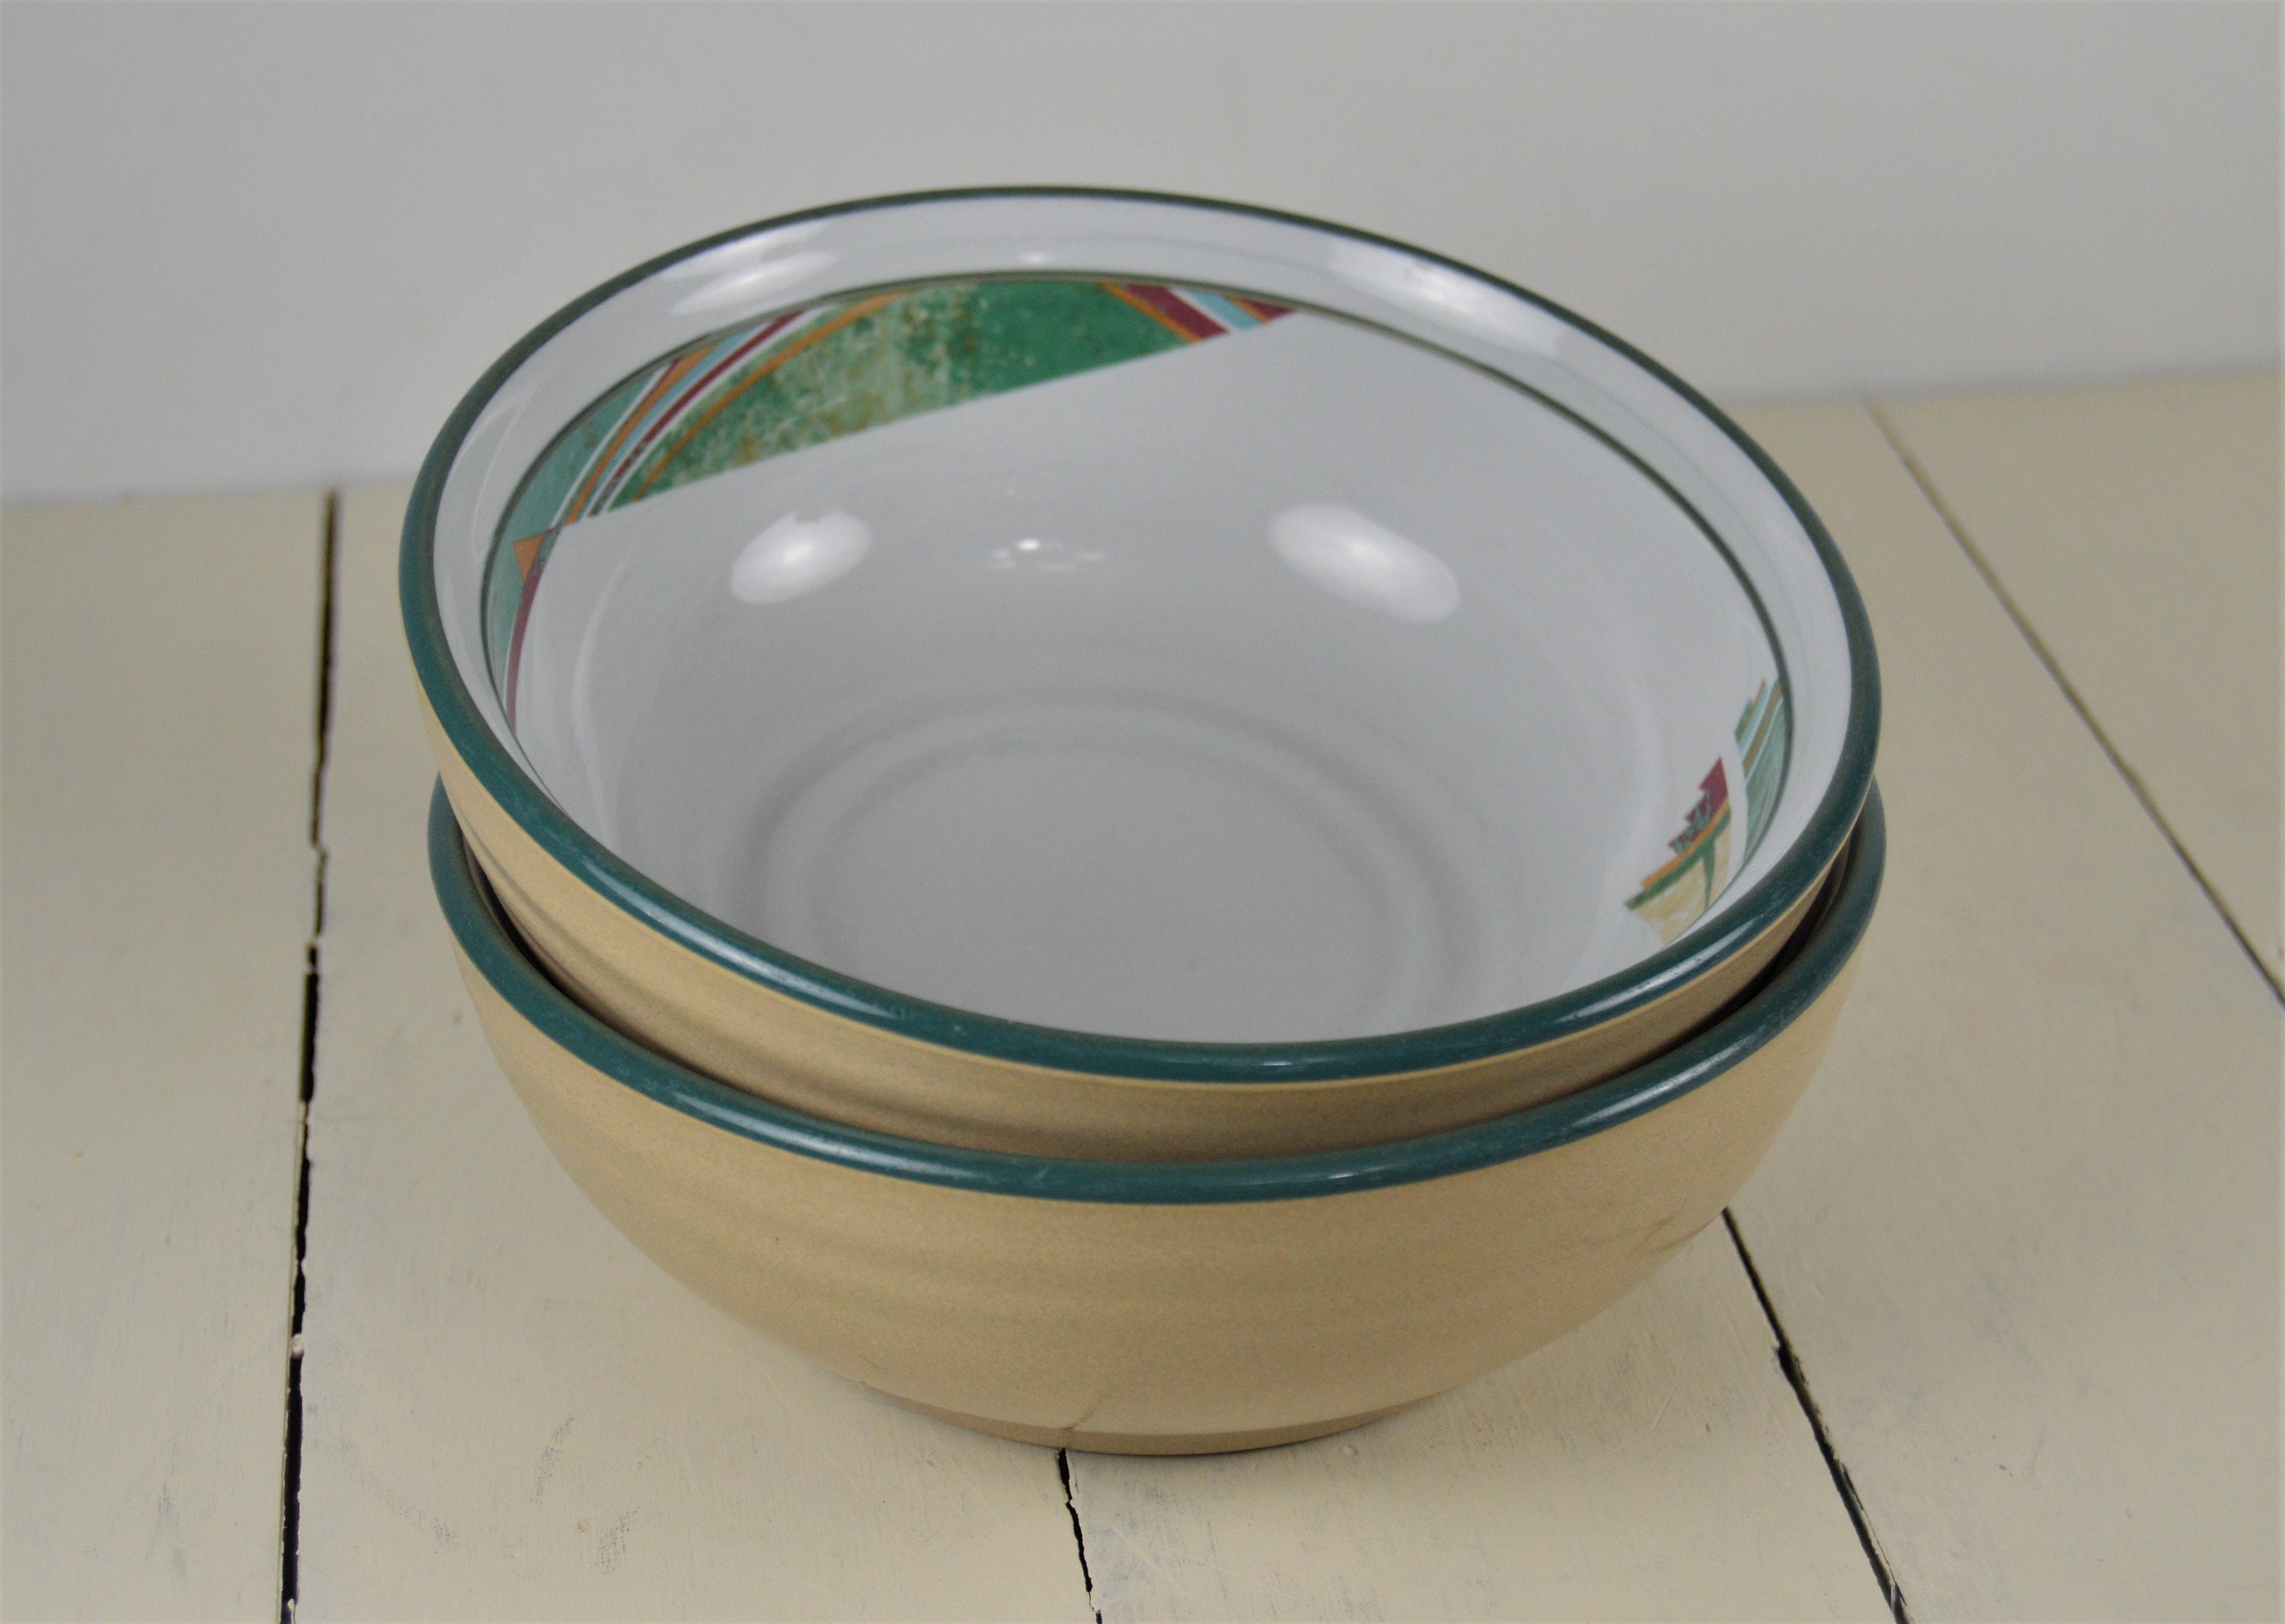 Excellent Condition Noritake Stoneware s Raindance Coupe Cereal Bowl 